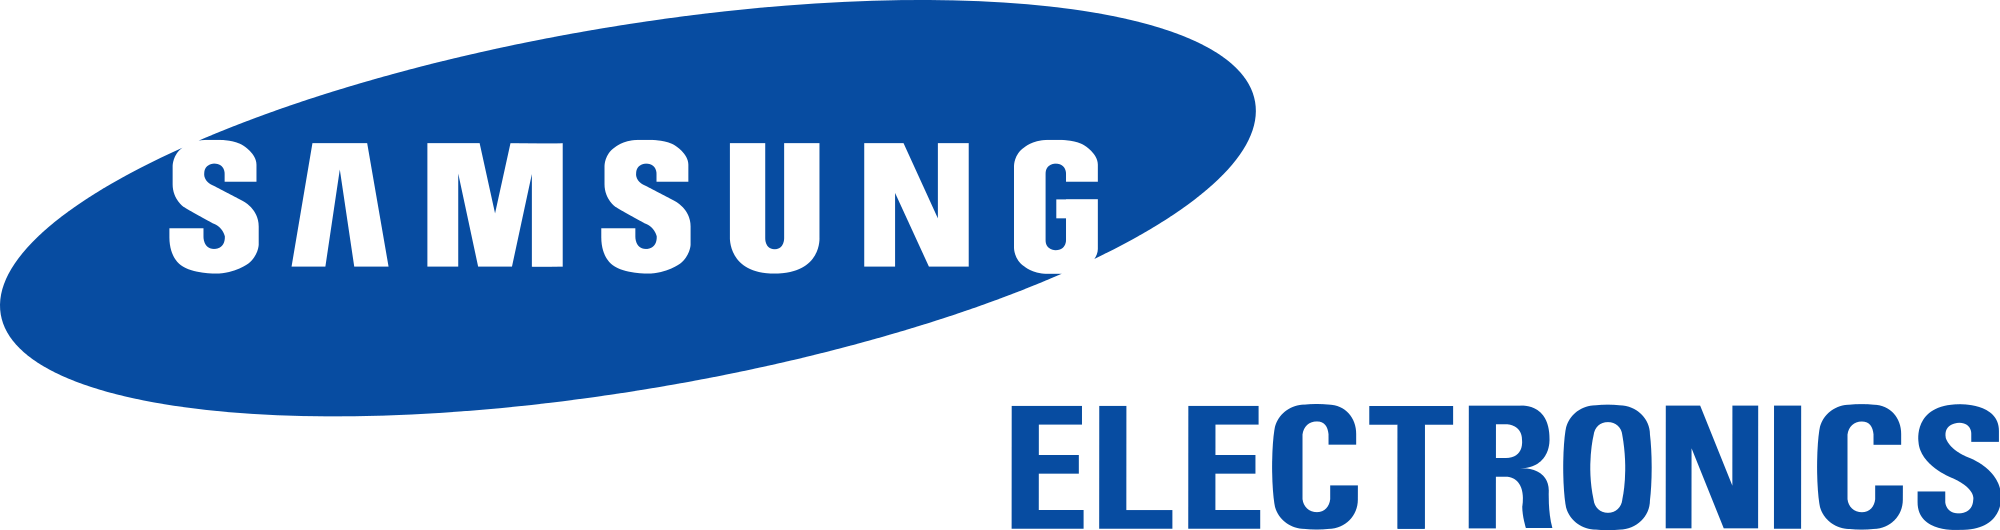 Electronics Logo - File:Samsung Electronics logo (english).svg - Wikimedia Commons